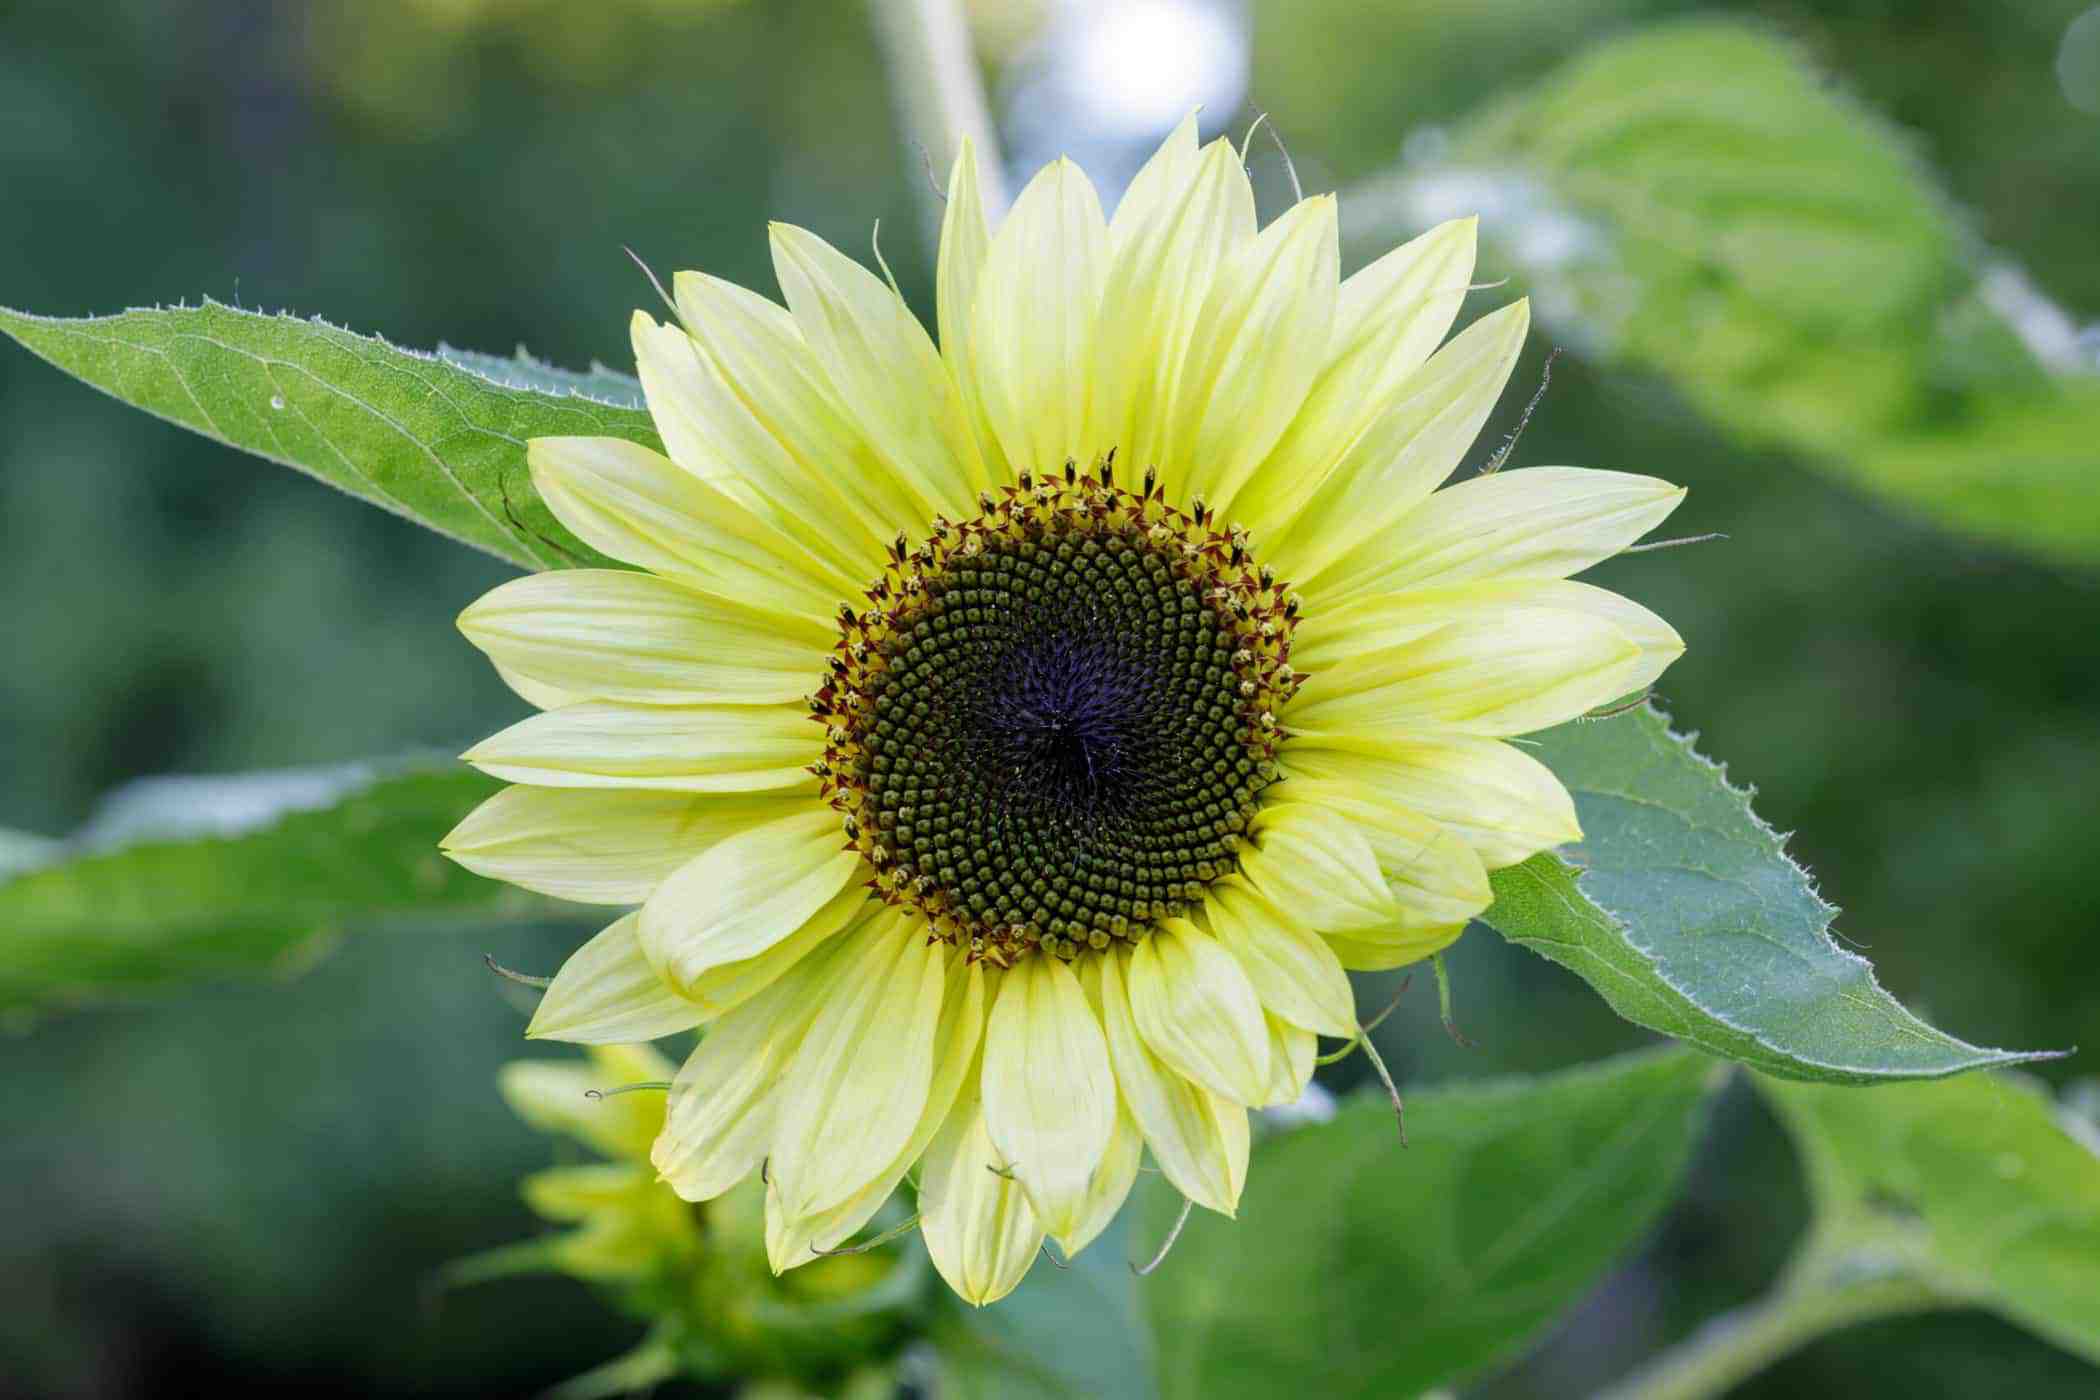 Lemon queen sunflower